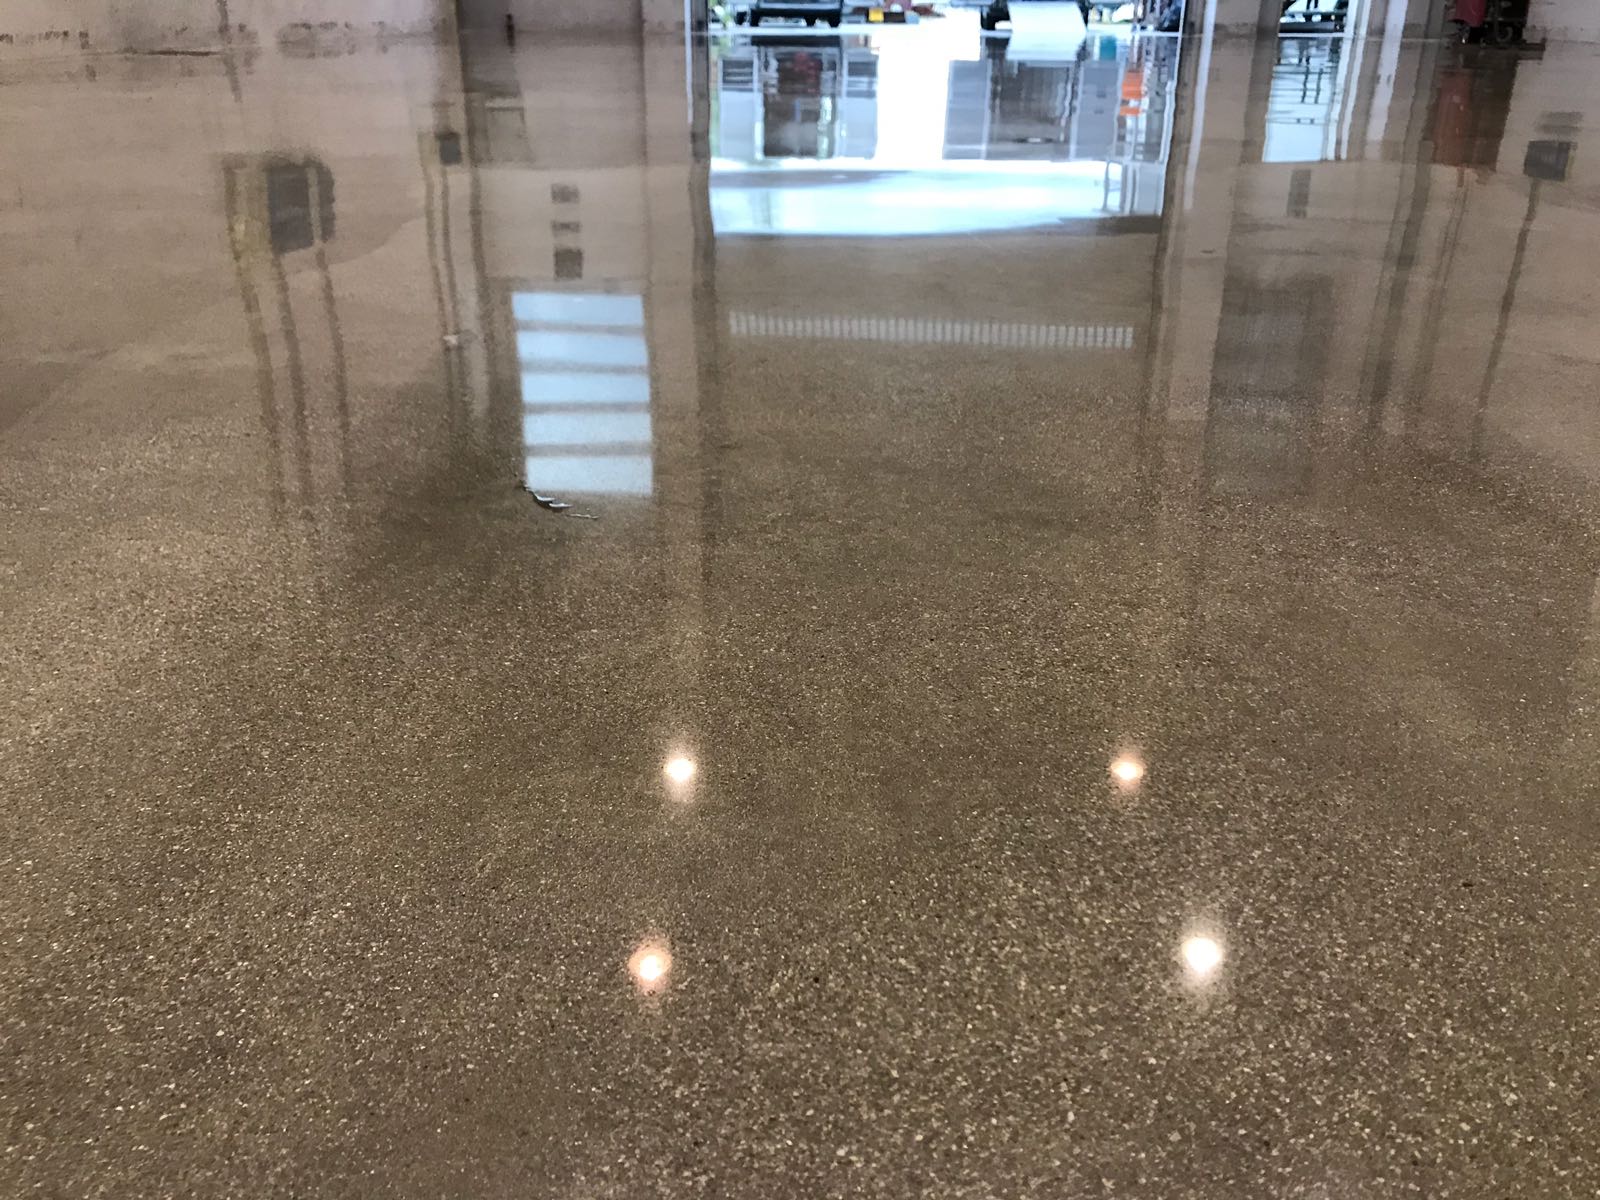 Grinding And Polishing Service On Concrete Floor Vicenza Italy Zanchetta Ennio